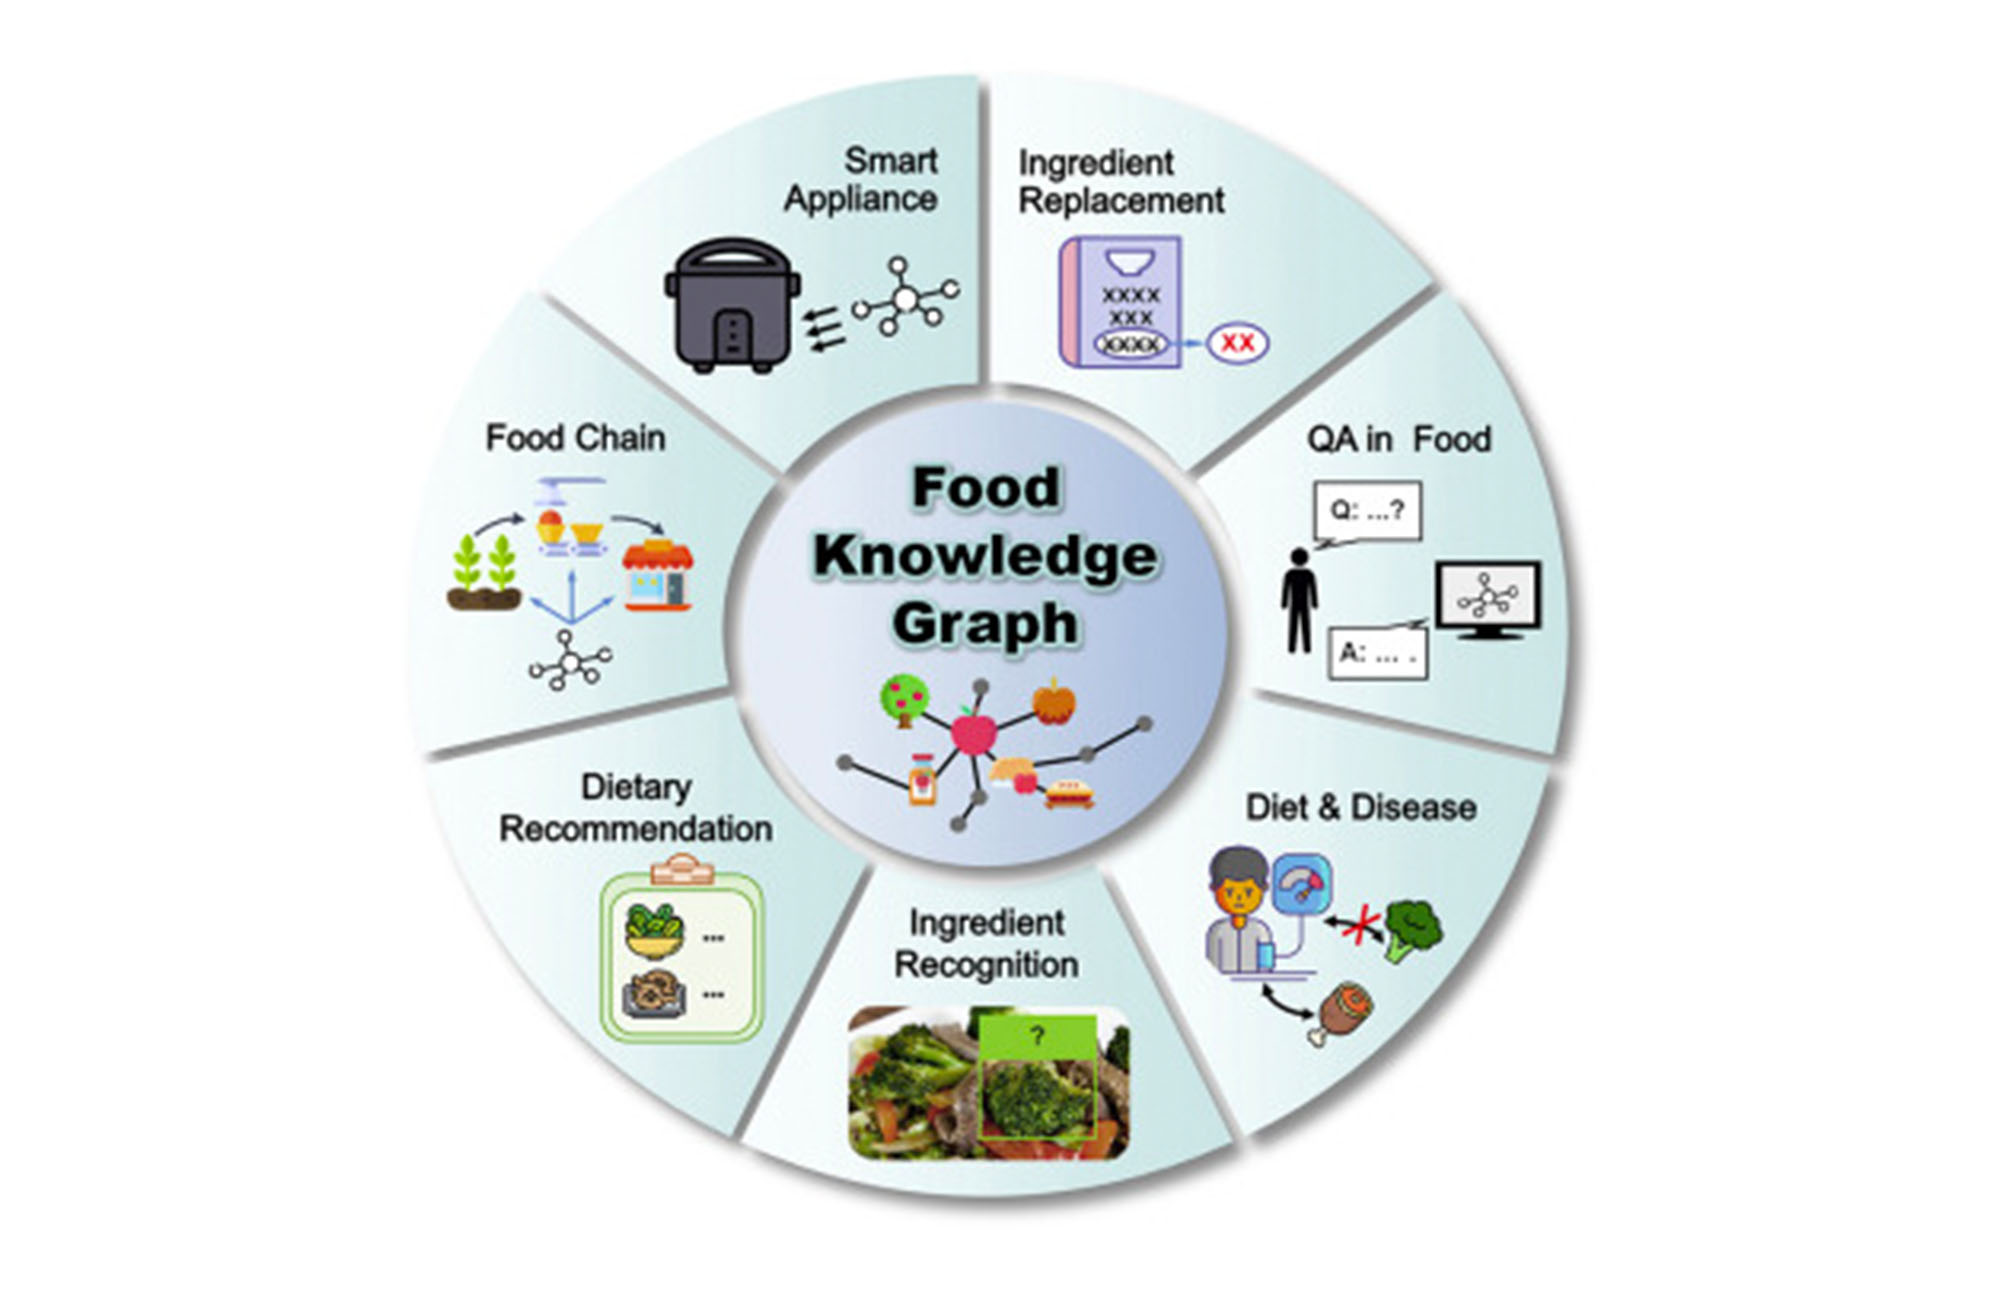 https://storage.googleapis.com/gweb-cloudblog-publish/images/Food_Knowledge_Graph.max-2000x2000.jpg